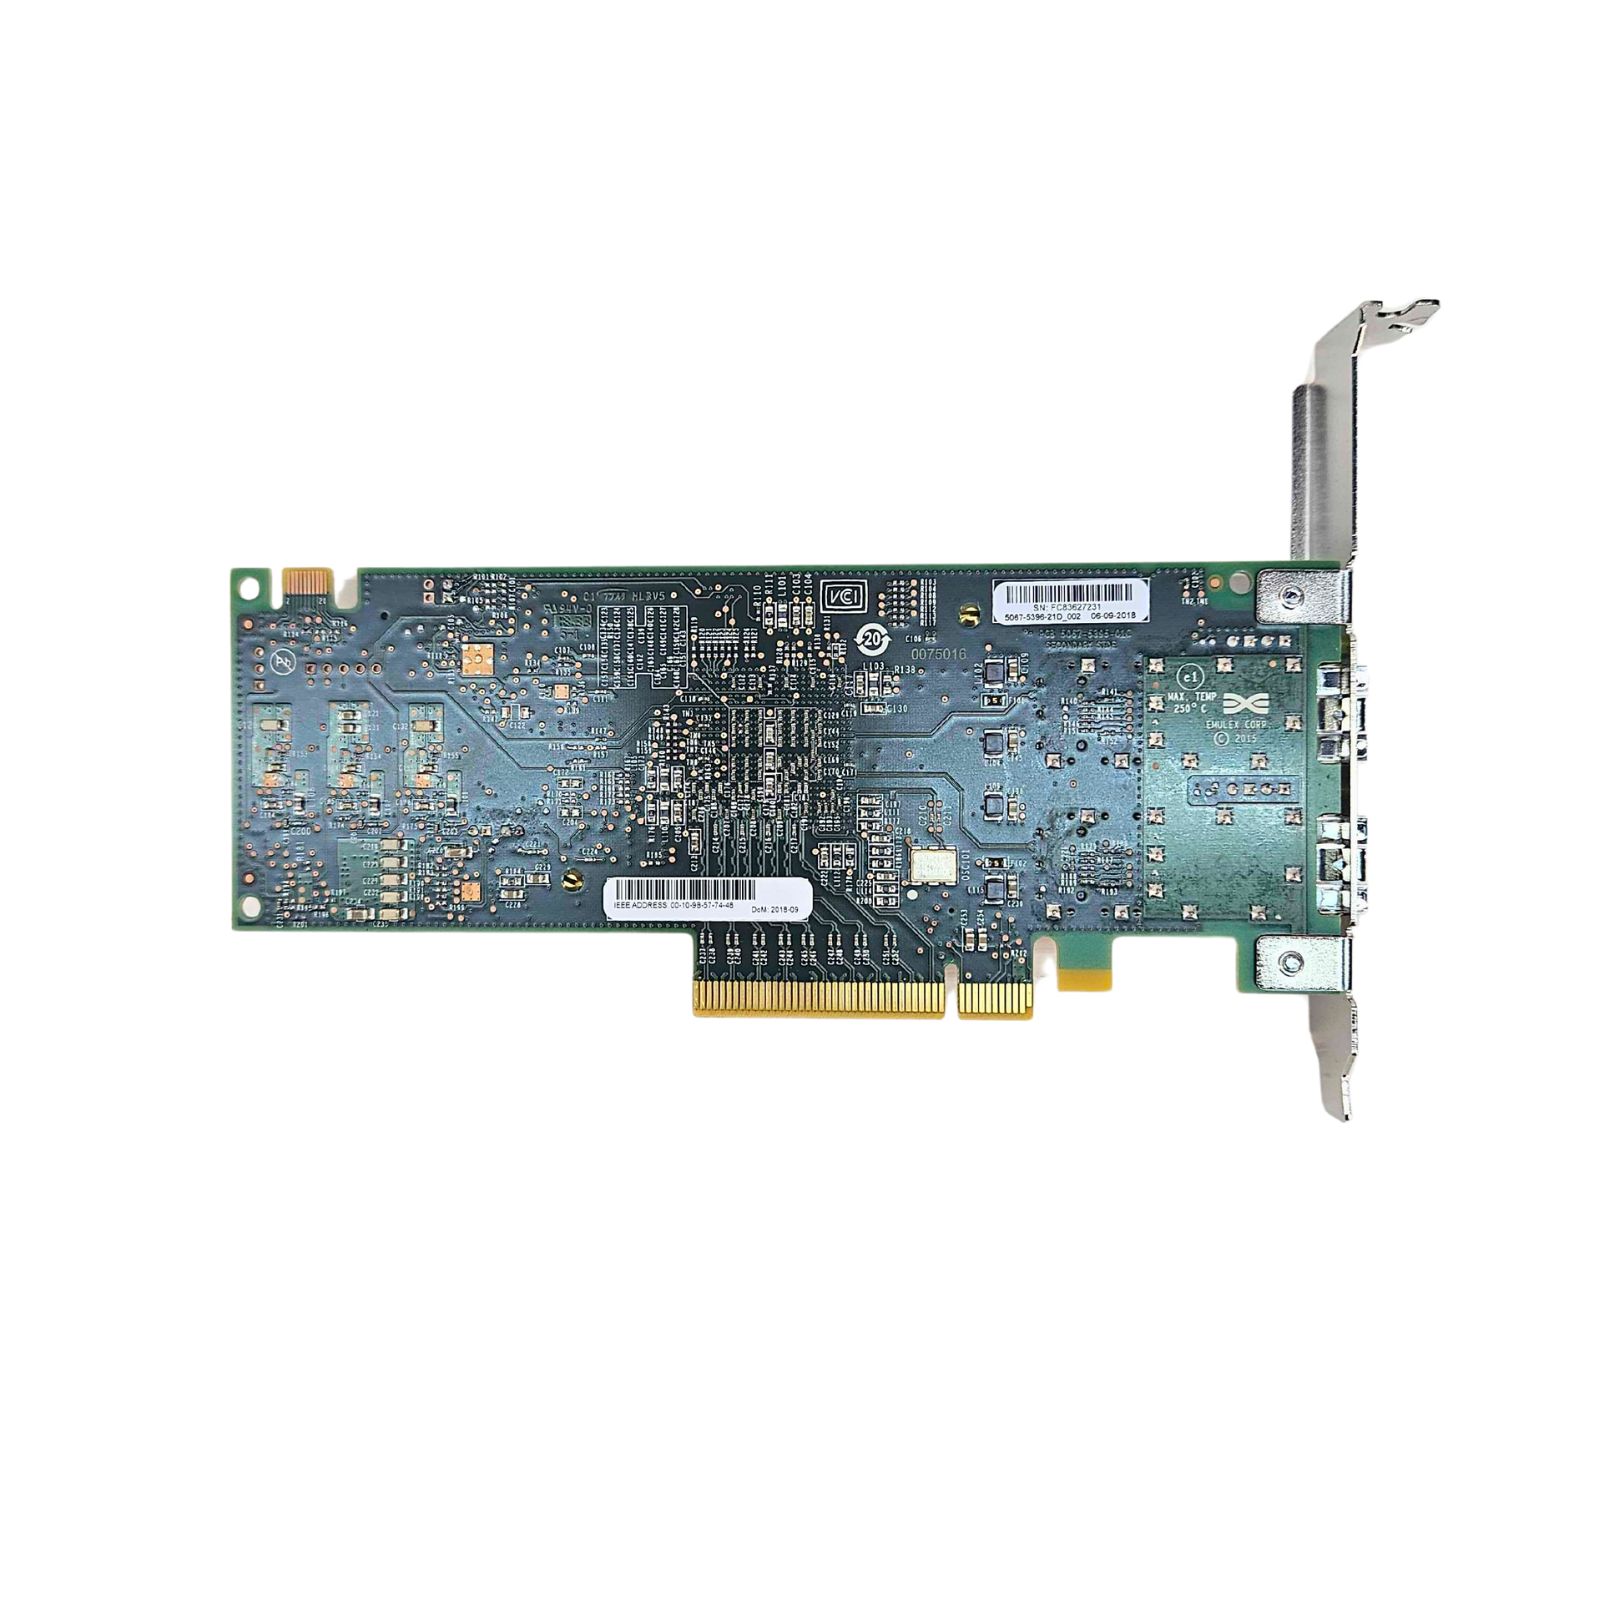  Emulex LPe31002-M6 16Gb 2-Port PCIe FC HBA (RXNT1)